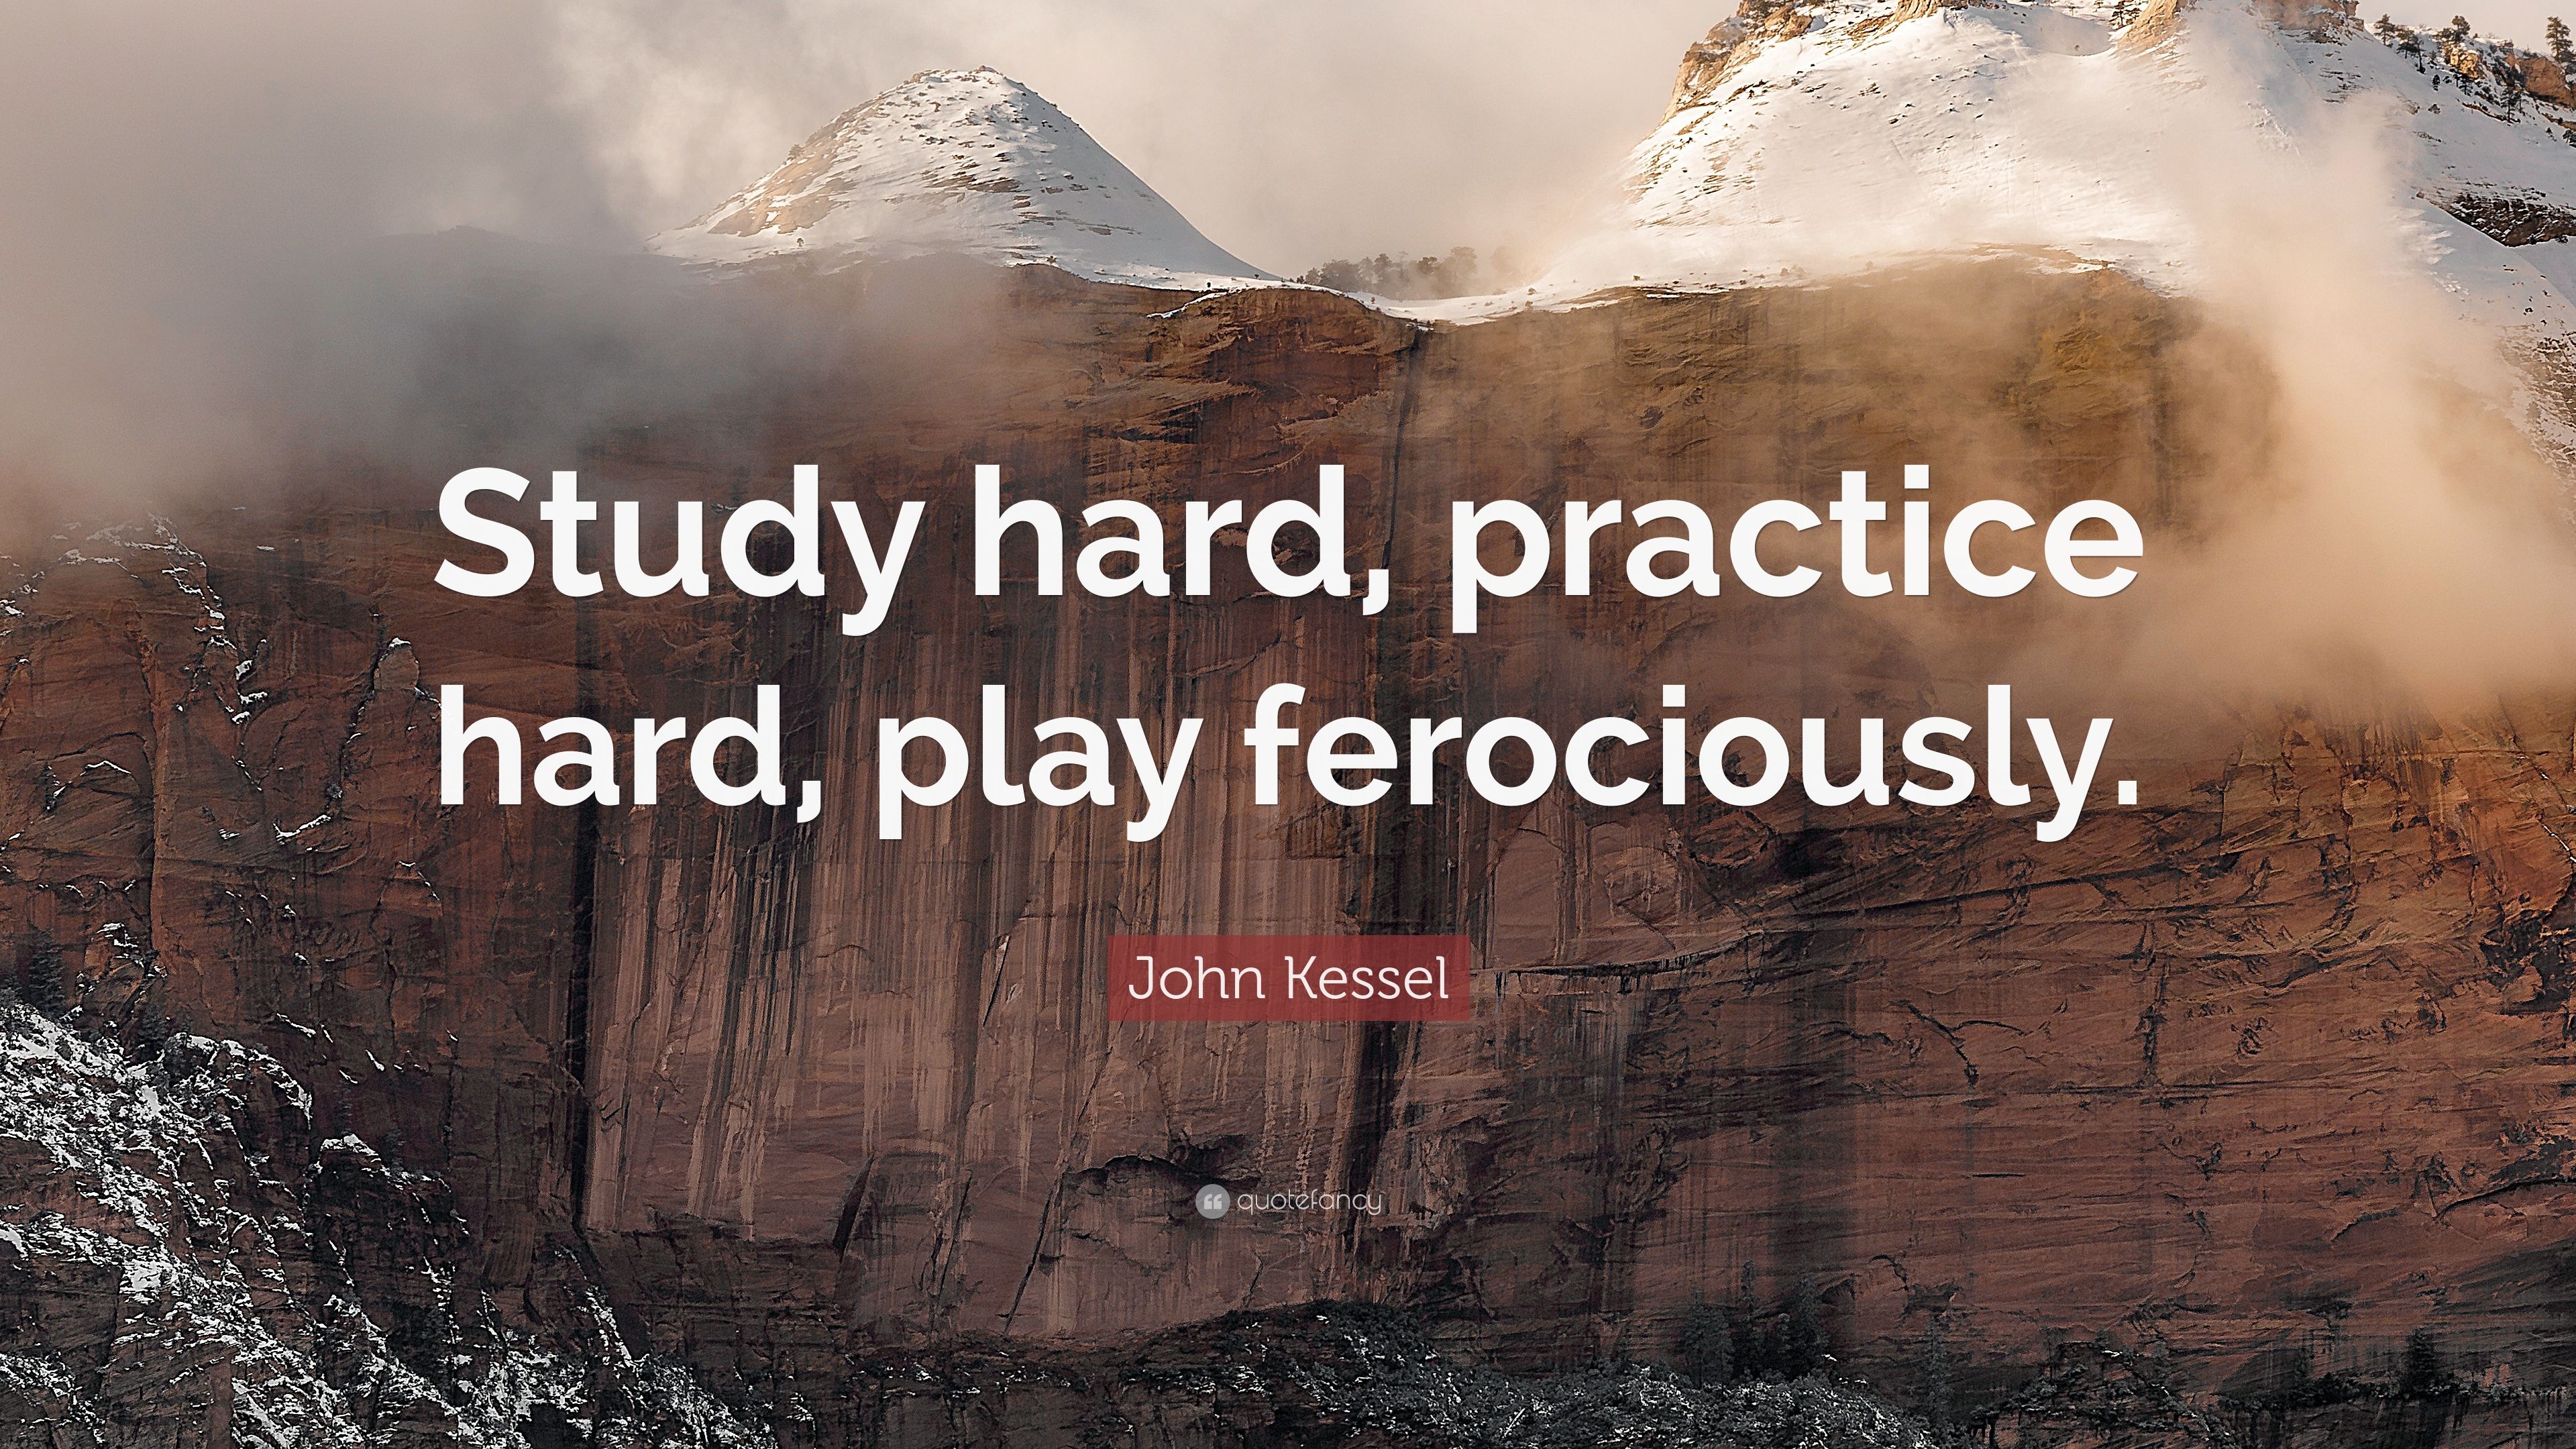 John Kessel Quote: “Study hard, practice hard, play ferociously